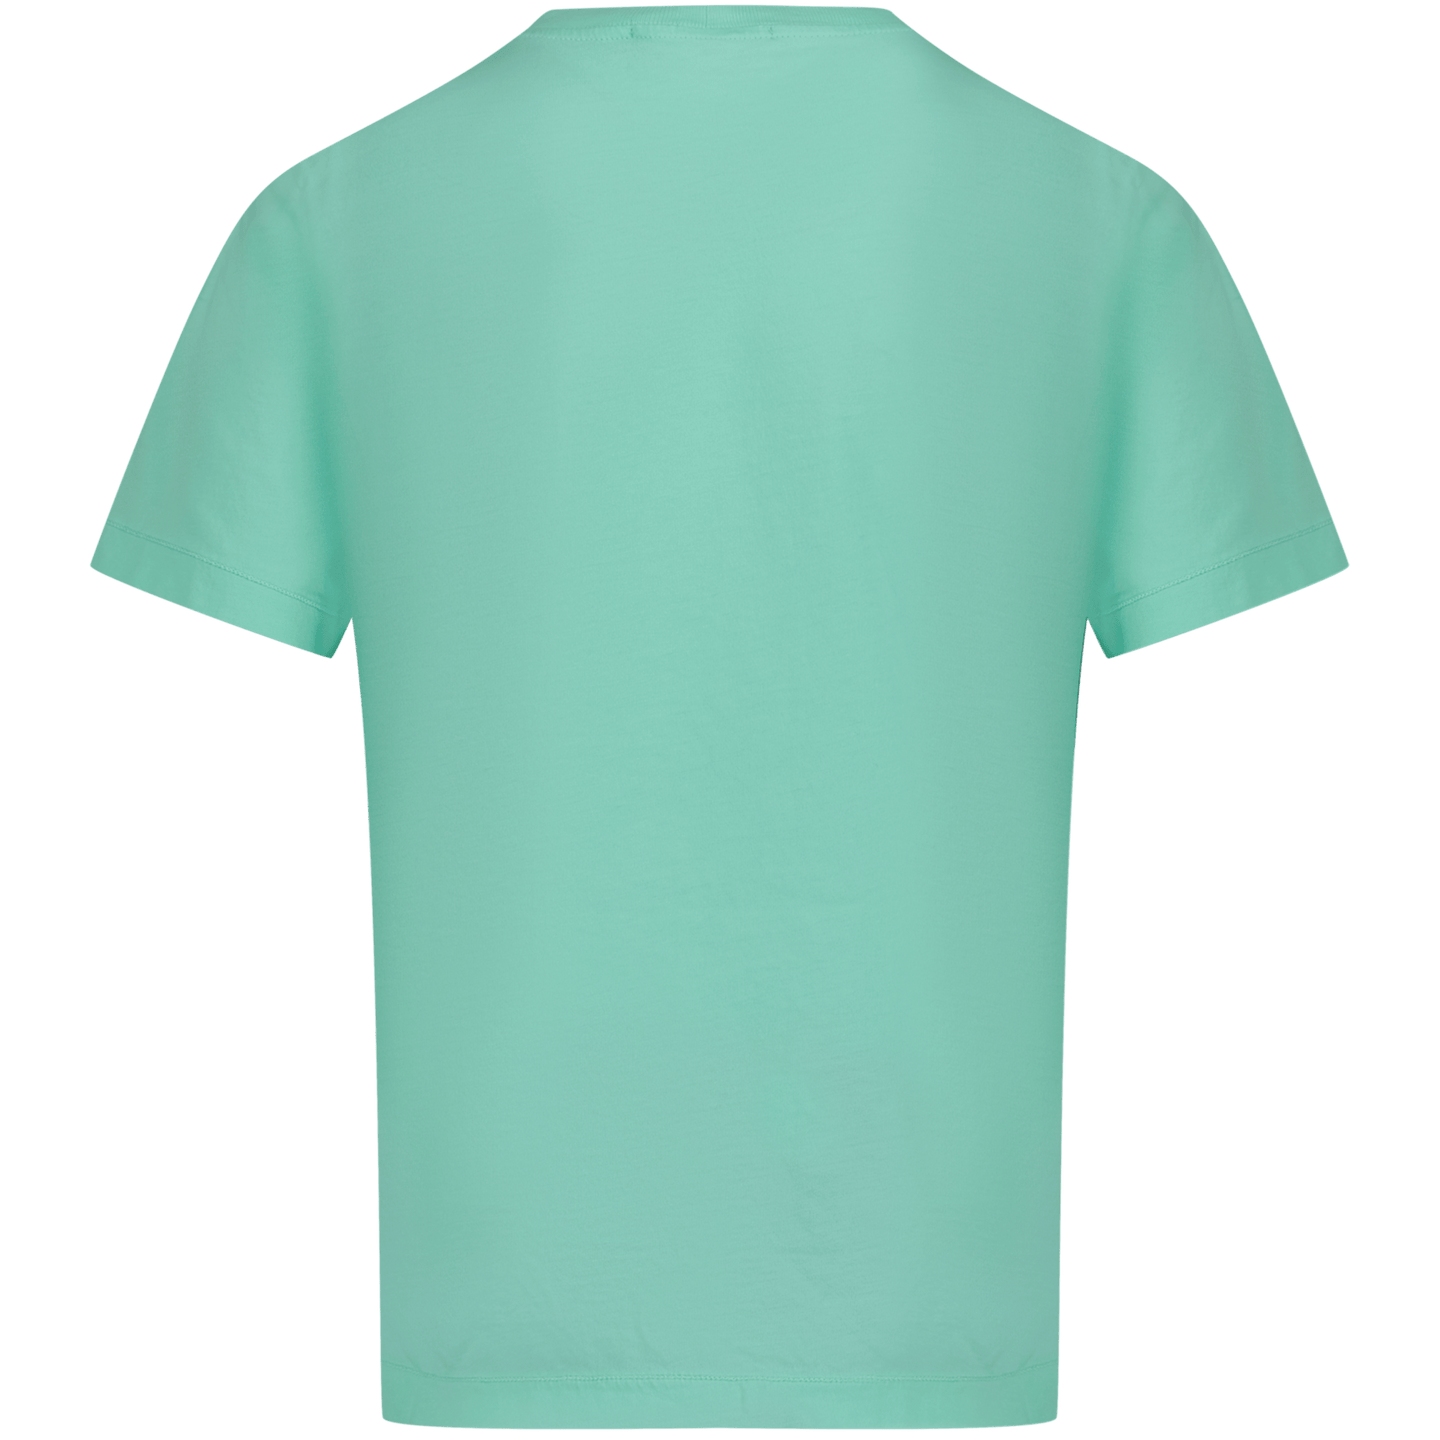 Stone Island Kinder Jongens T-Shirt Mint 2Y